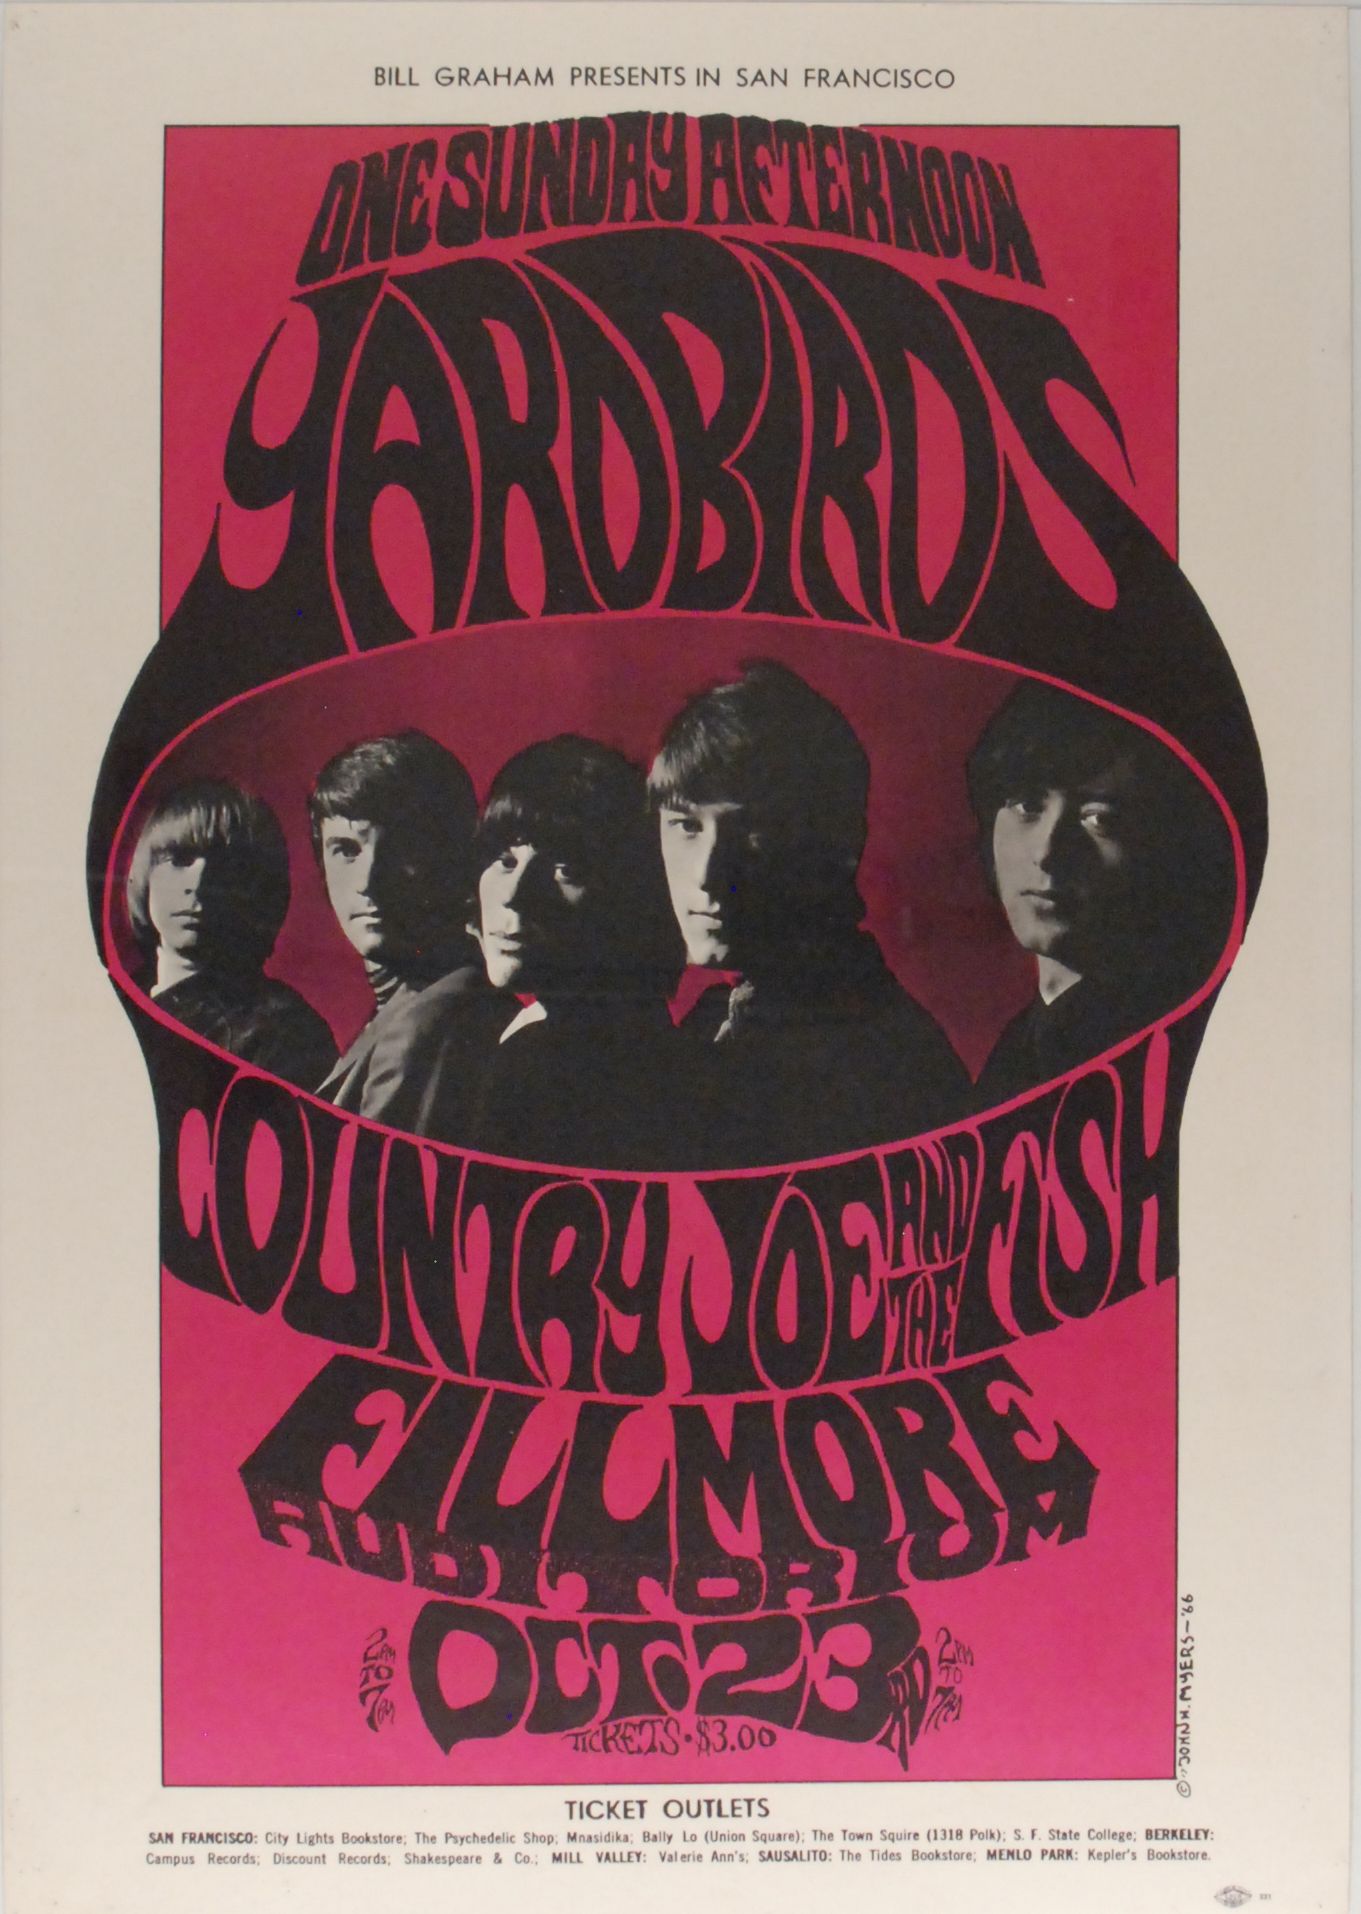 BG-33-OP-1 Yardbirds The Fillmore 1966 Concert Poster